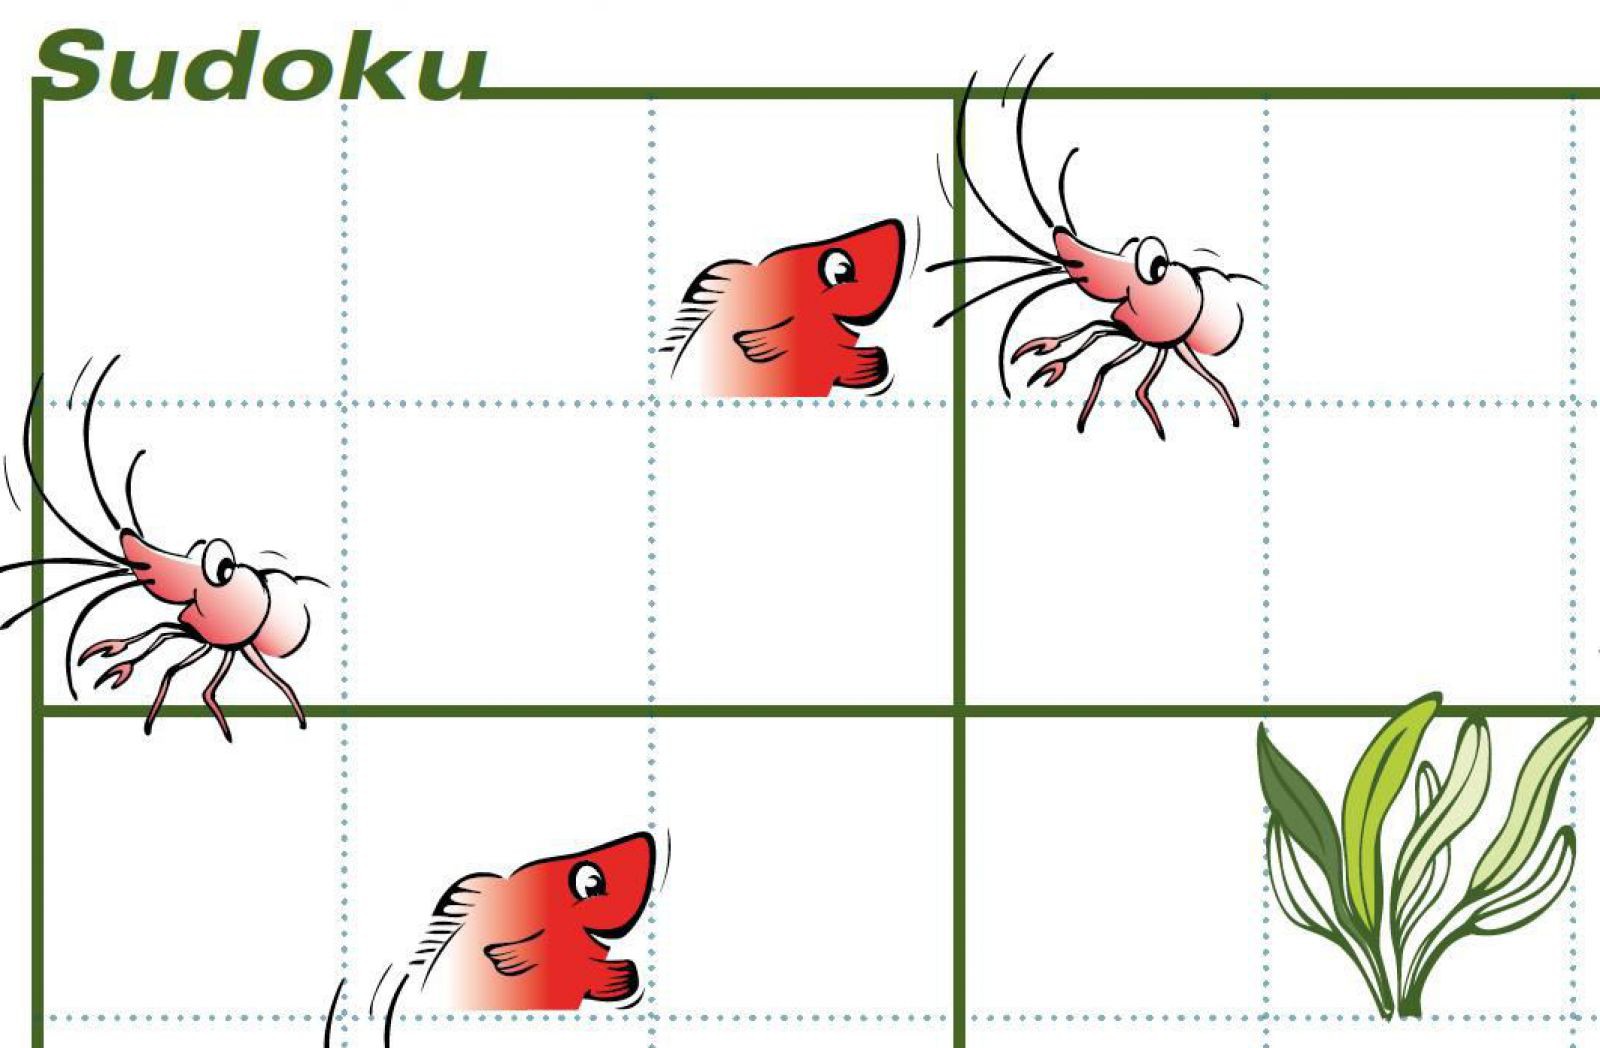 sudoku_aquarientiere